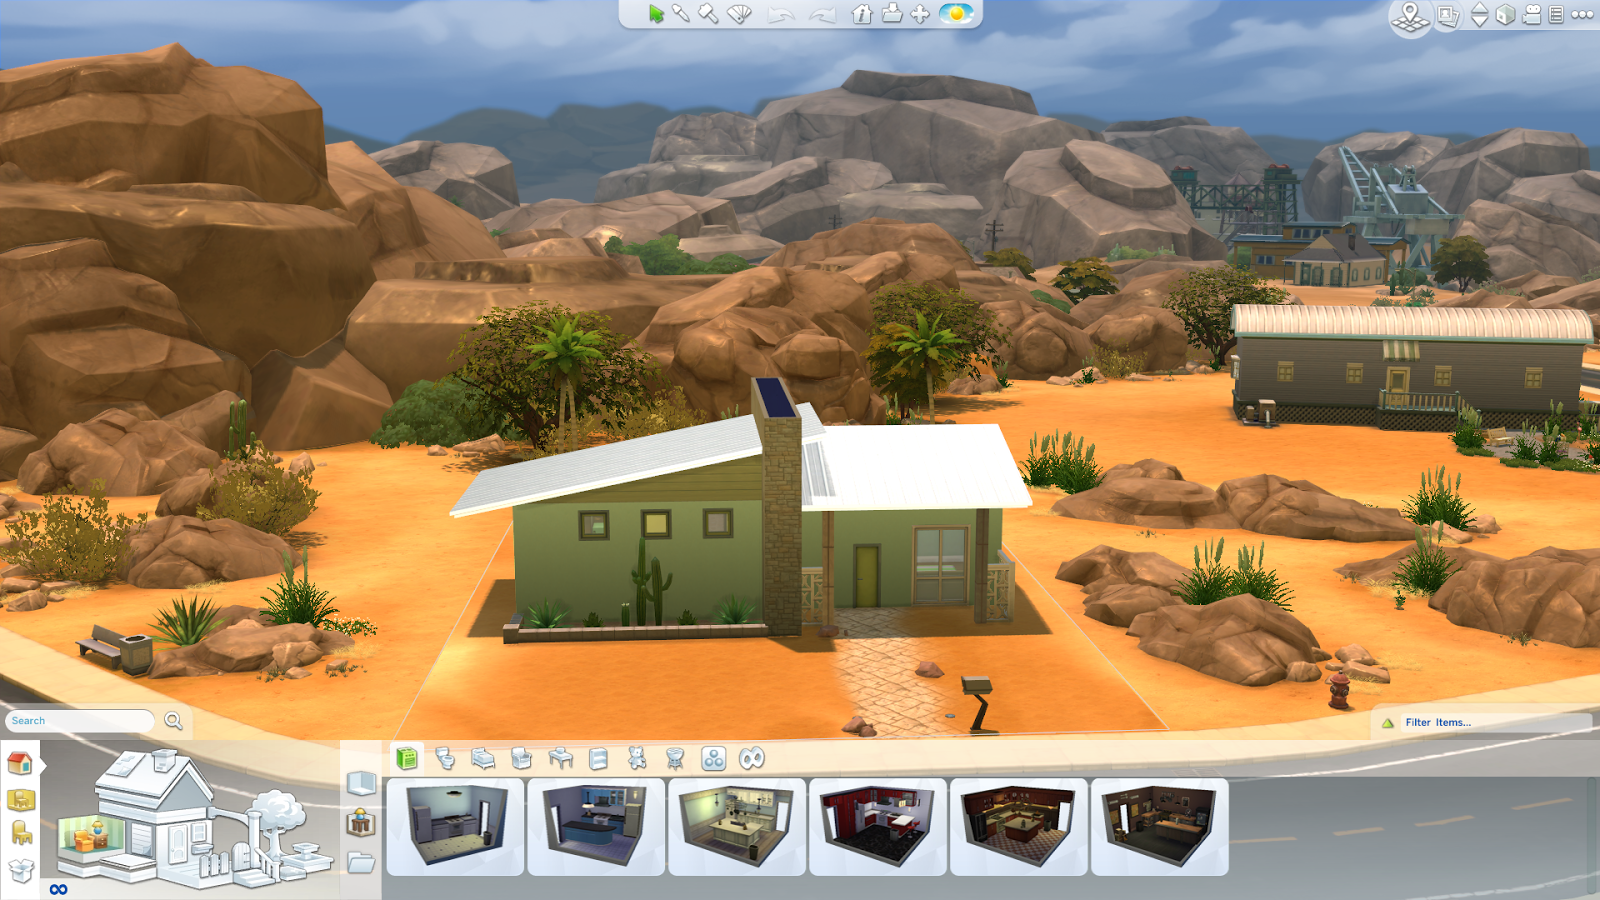 Скриншот 2 к игре The Sims 4 v.1.107.151.1020 [Папка игры] (2014)